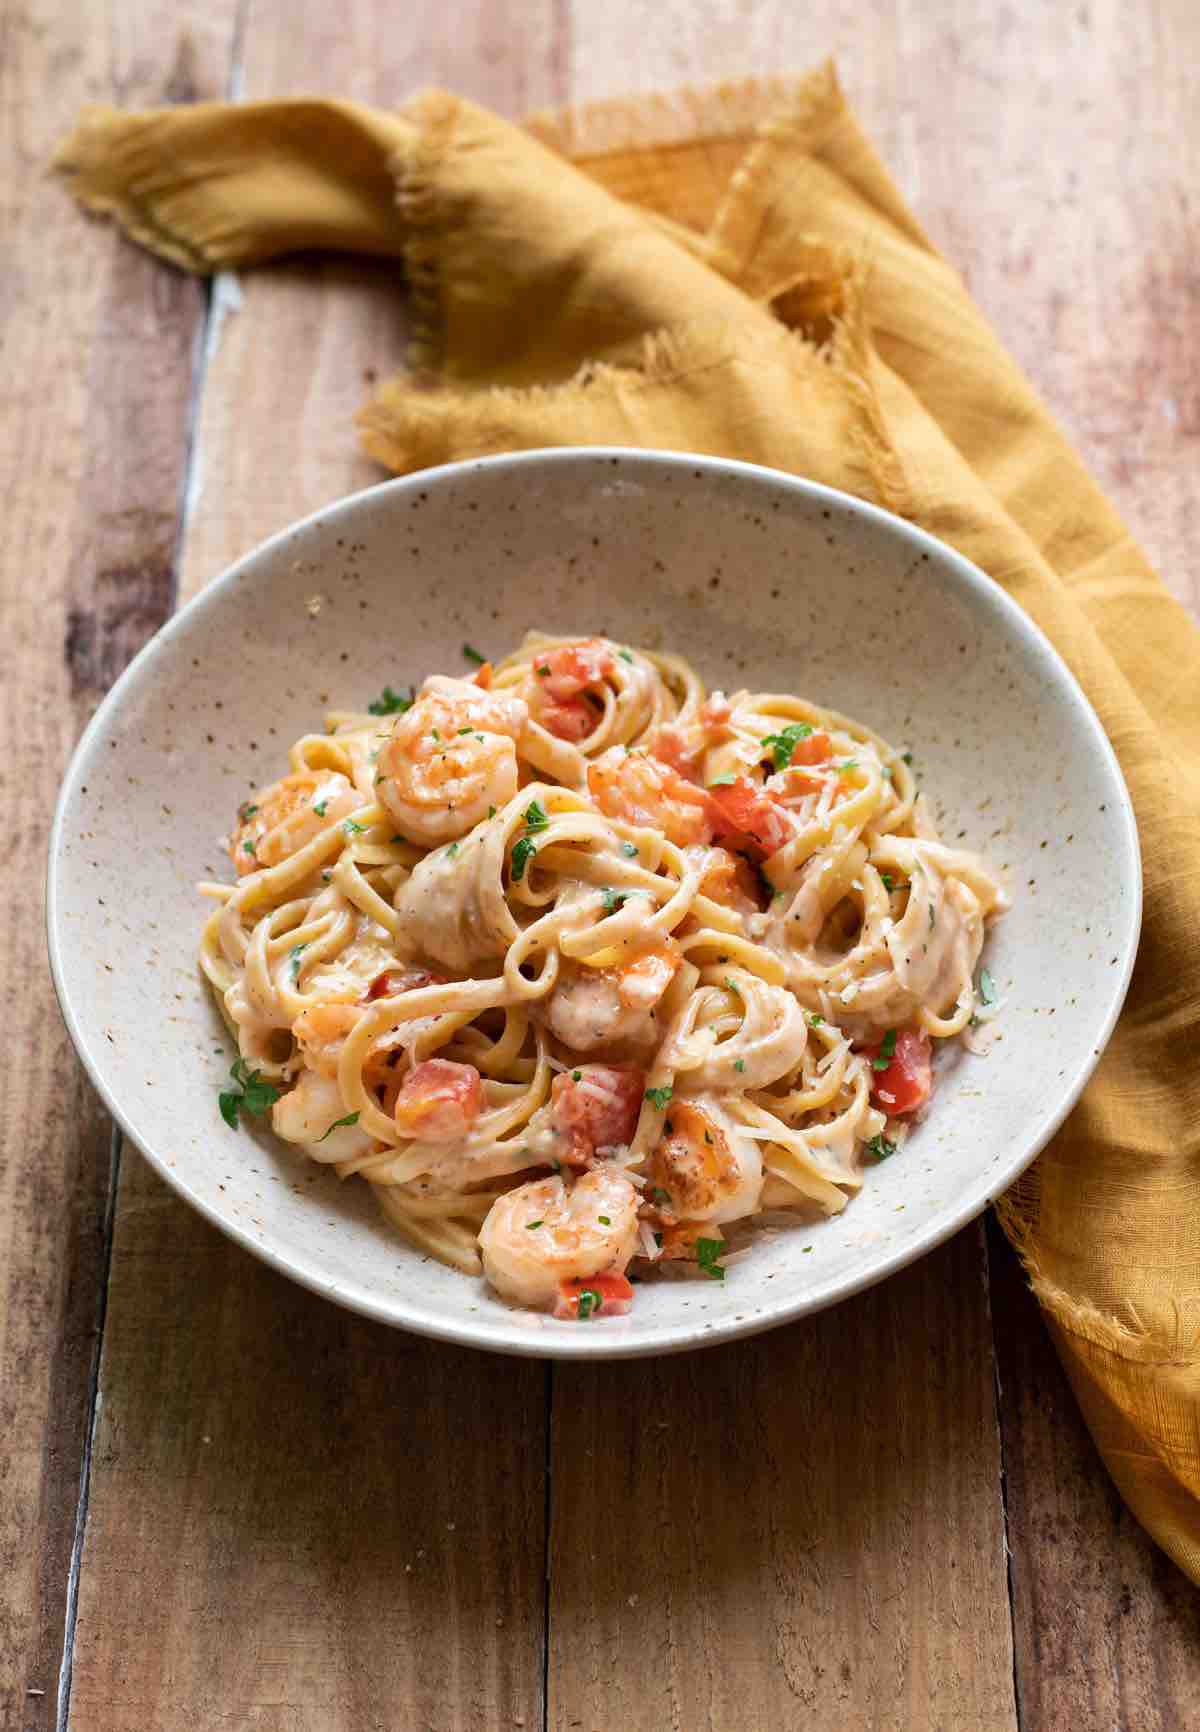 10 DIY Recipes for National Pasta Day - October 17 - CouponCause.com